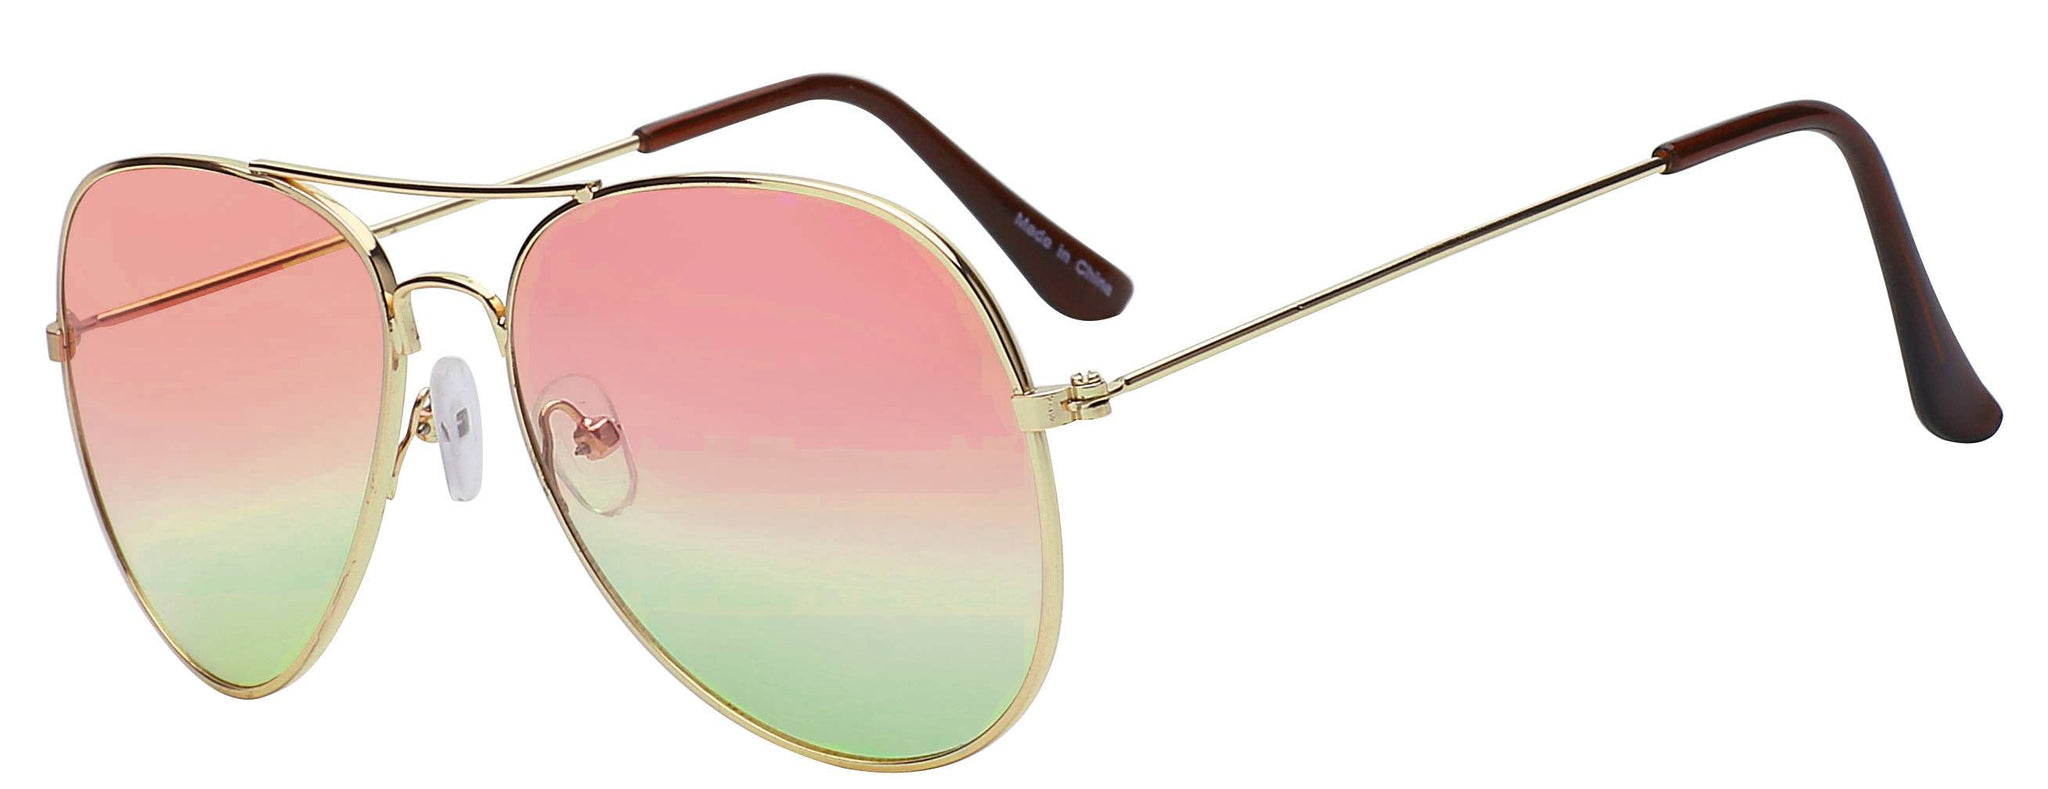 Aviator Sunglasses - Gold Frame / Red Green Two-tone Lens